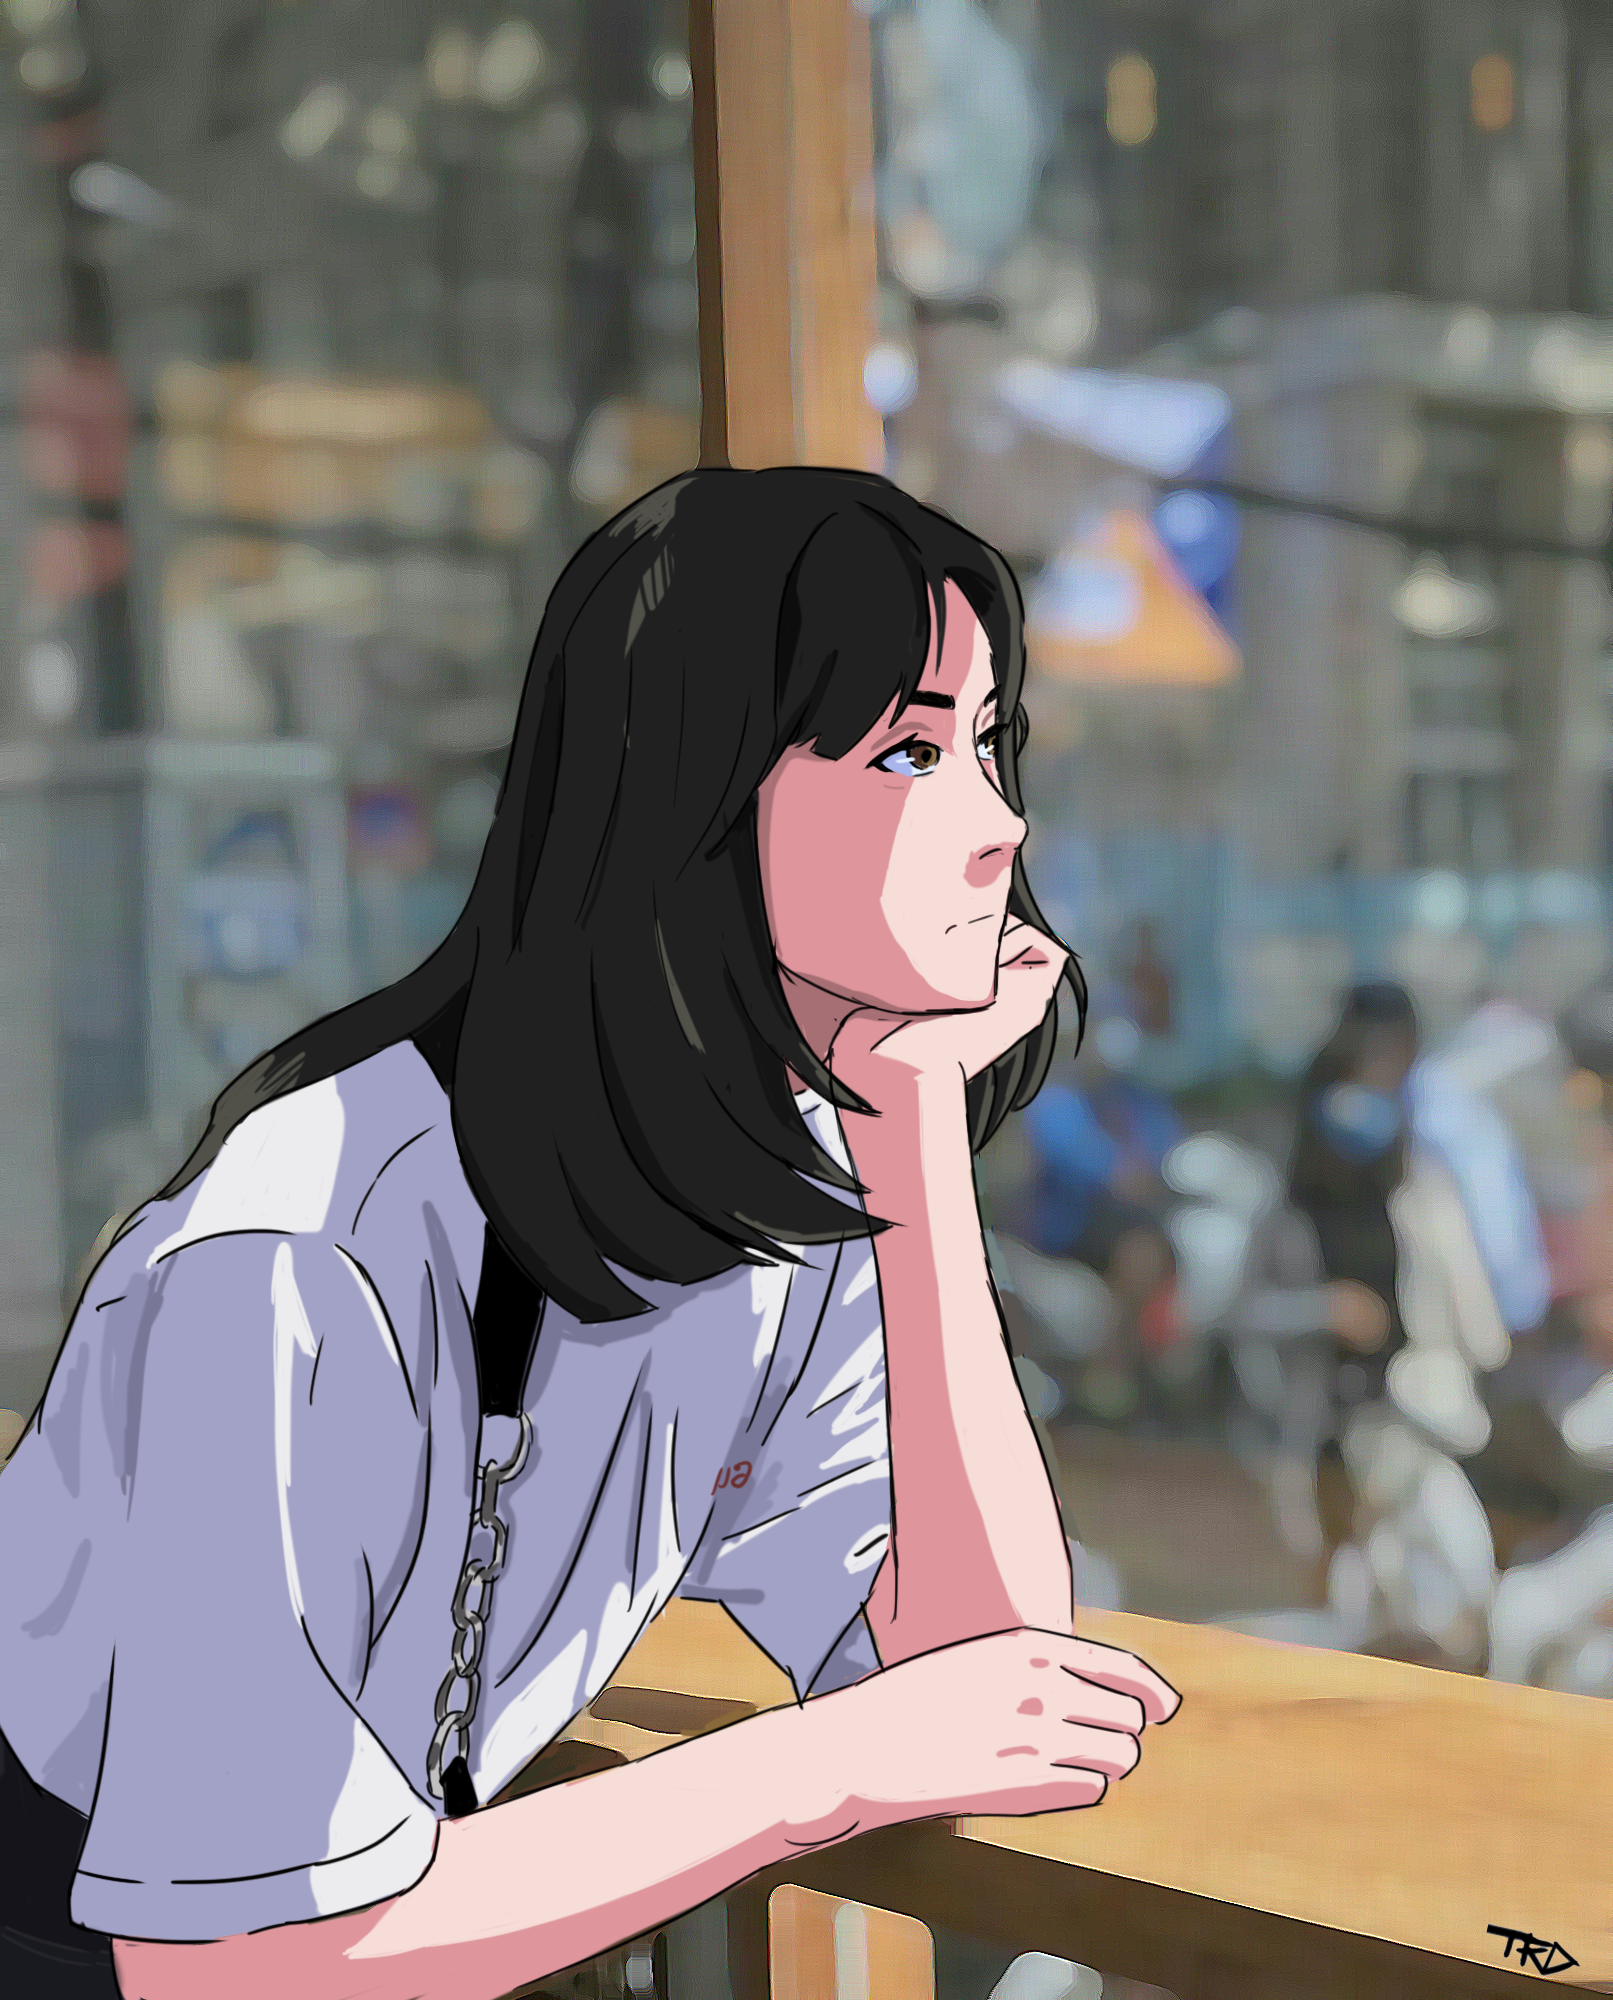 Women Japan Portrait Portrait Display Long Hair Asia Cafe Anime Girls Looking Away Hand On Face Blur 1613x2000